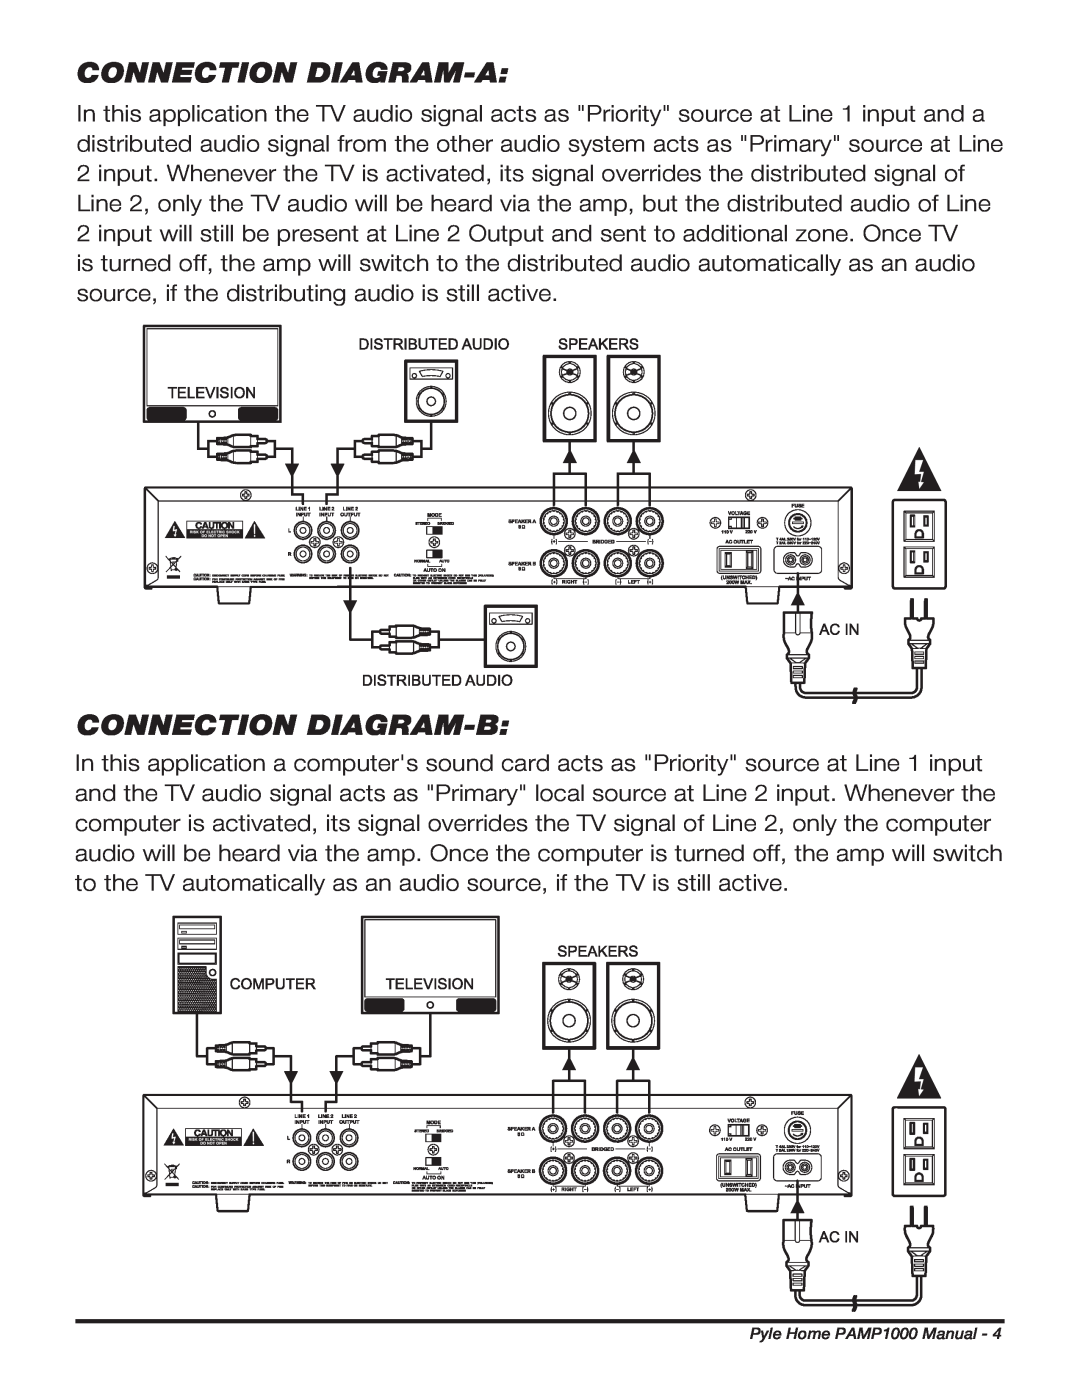 PYLE Audio PAMP1000 manual Connection Diagram-A, Connection Diagram-B 